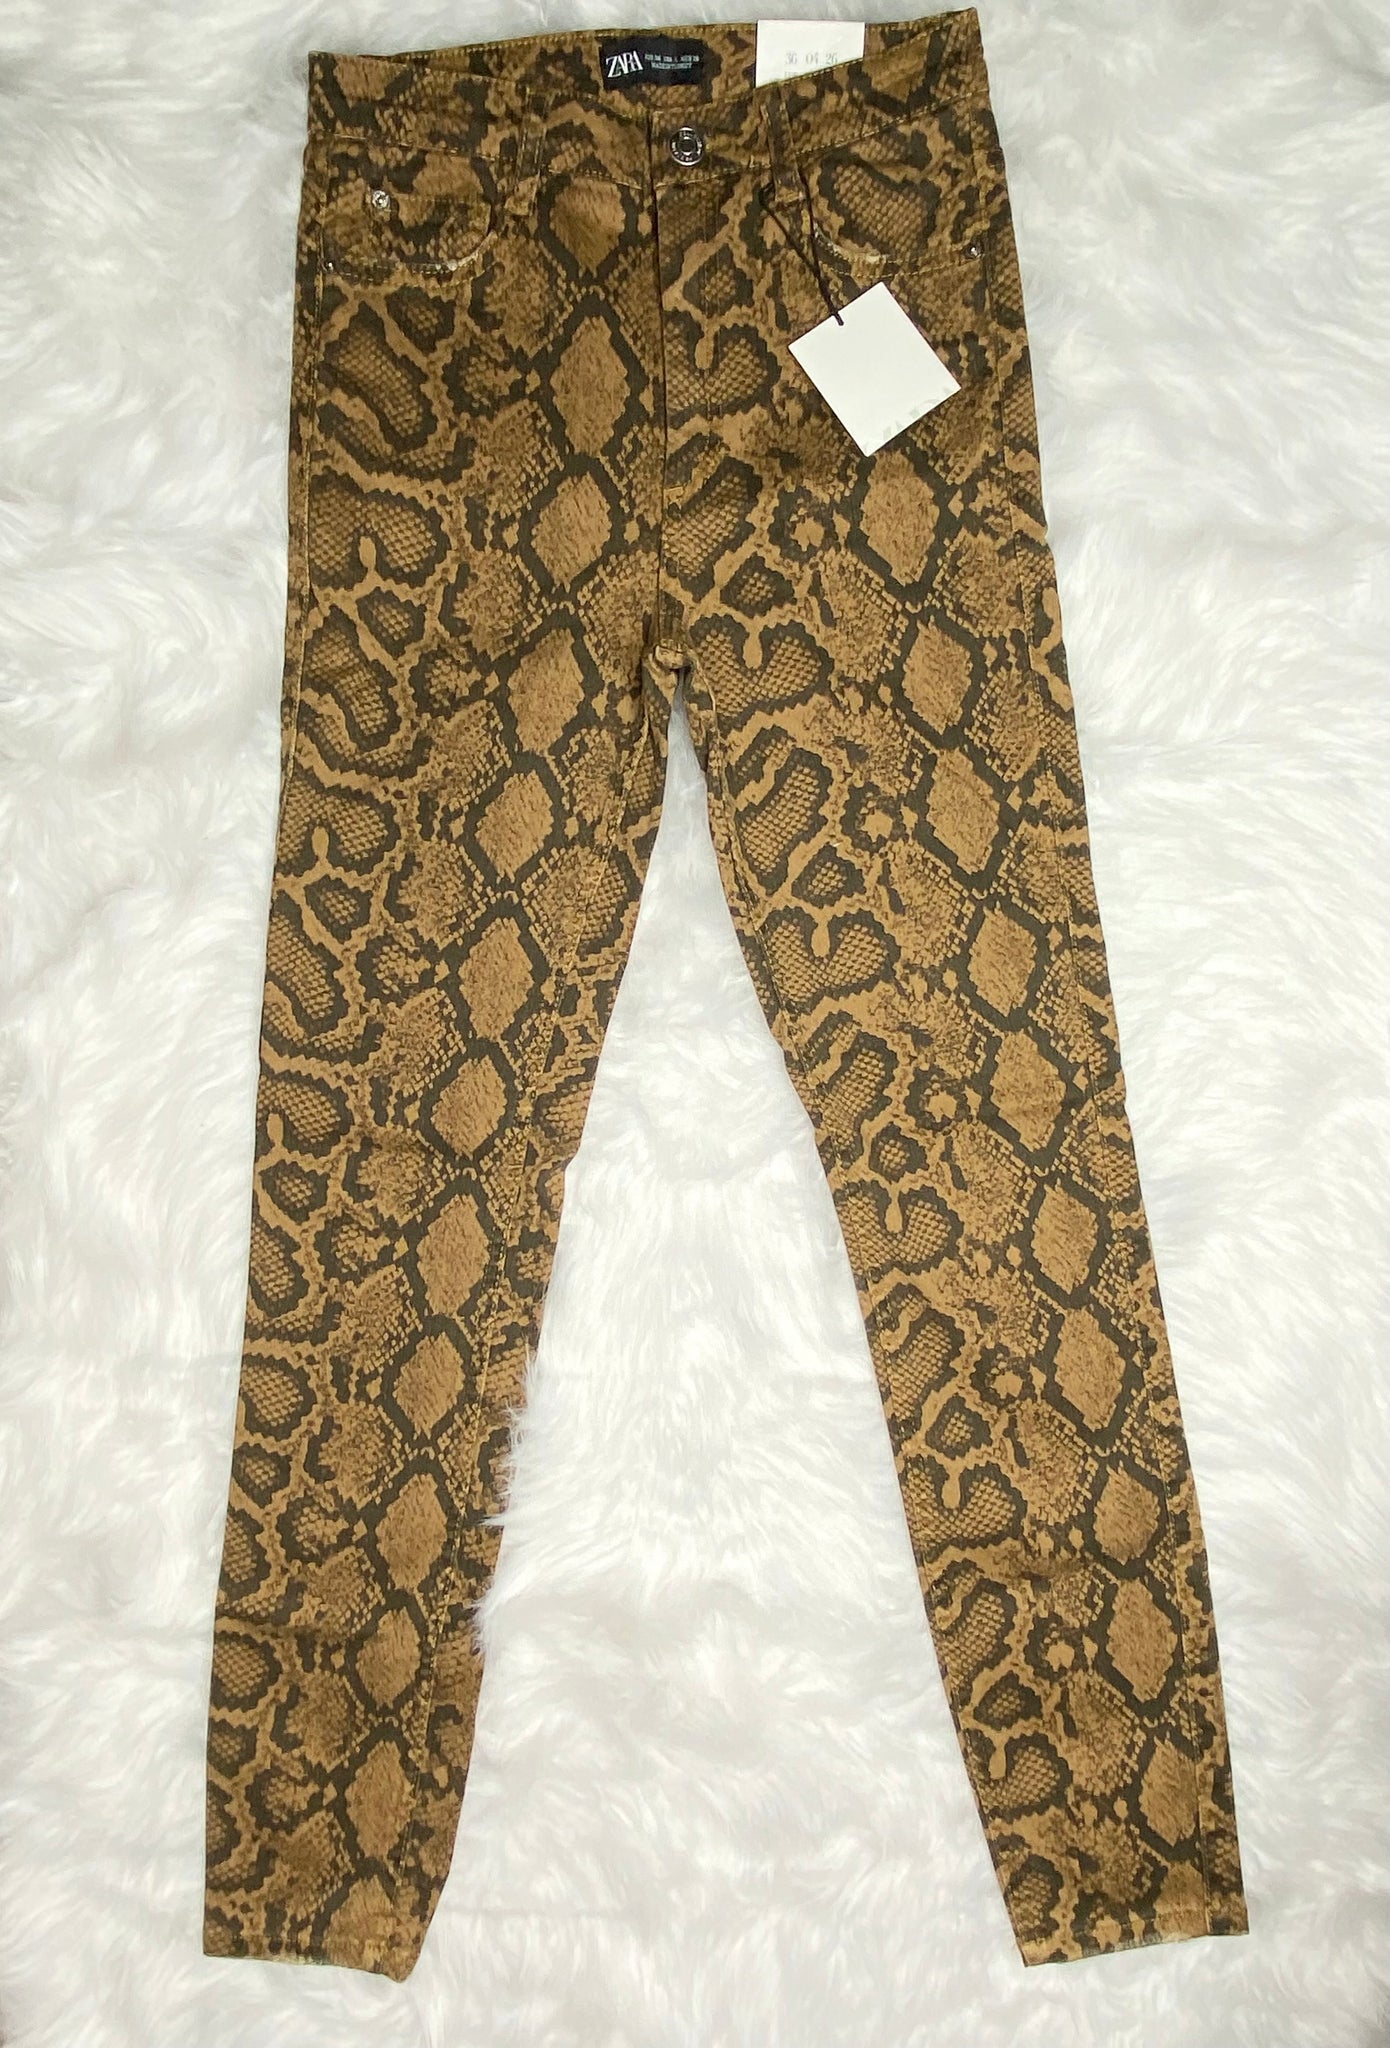 Zara Leopard Print Jeans (US4) – The HOT Exchange